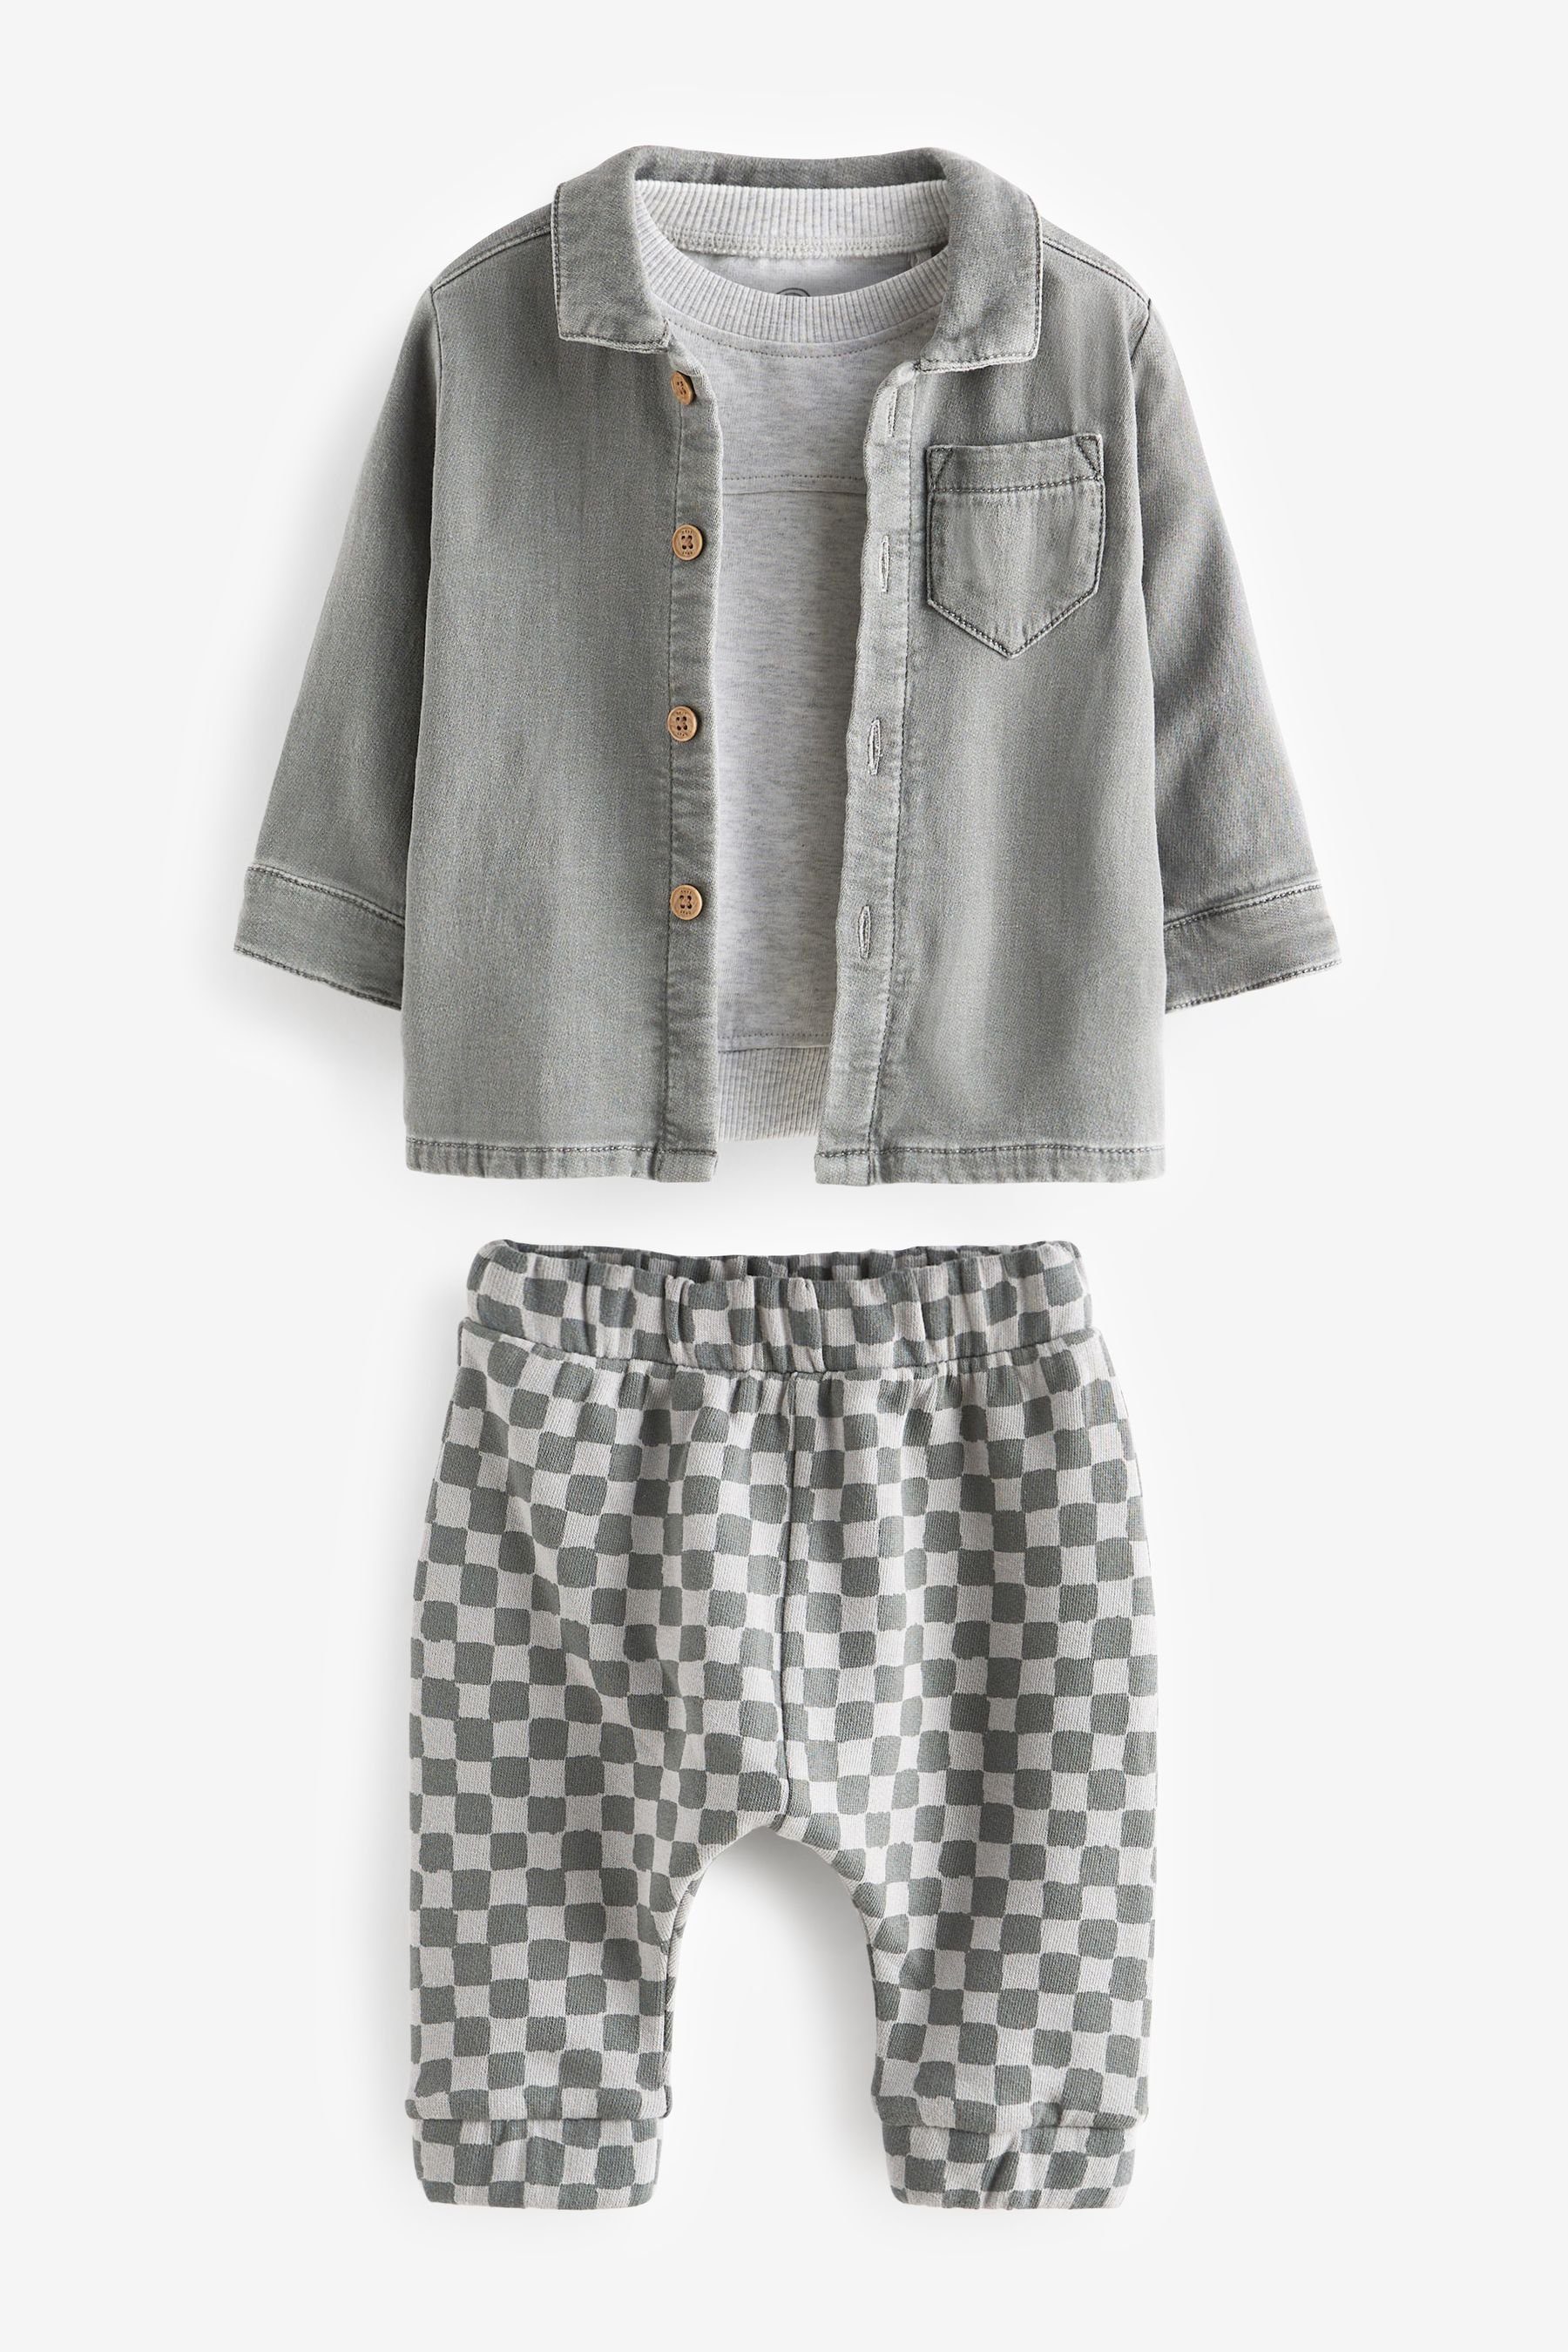 Next Hemd & Hose Baby-Set mit Hemdjacke, T-Shirt und Jogginghose (3-tlg) Monochrome | Baby-Sets